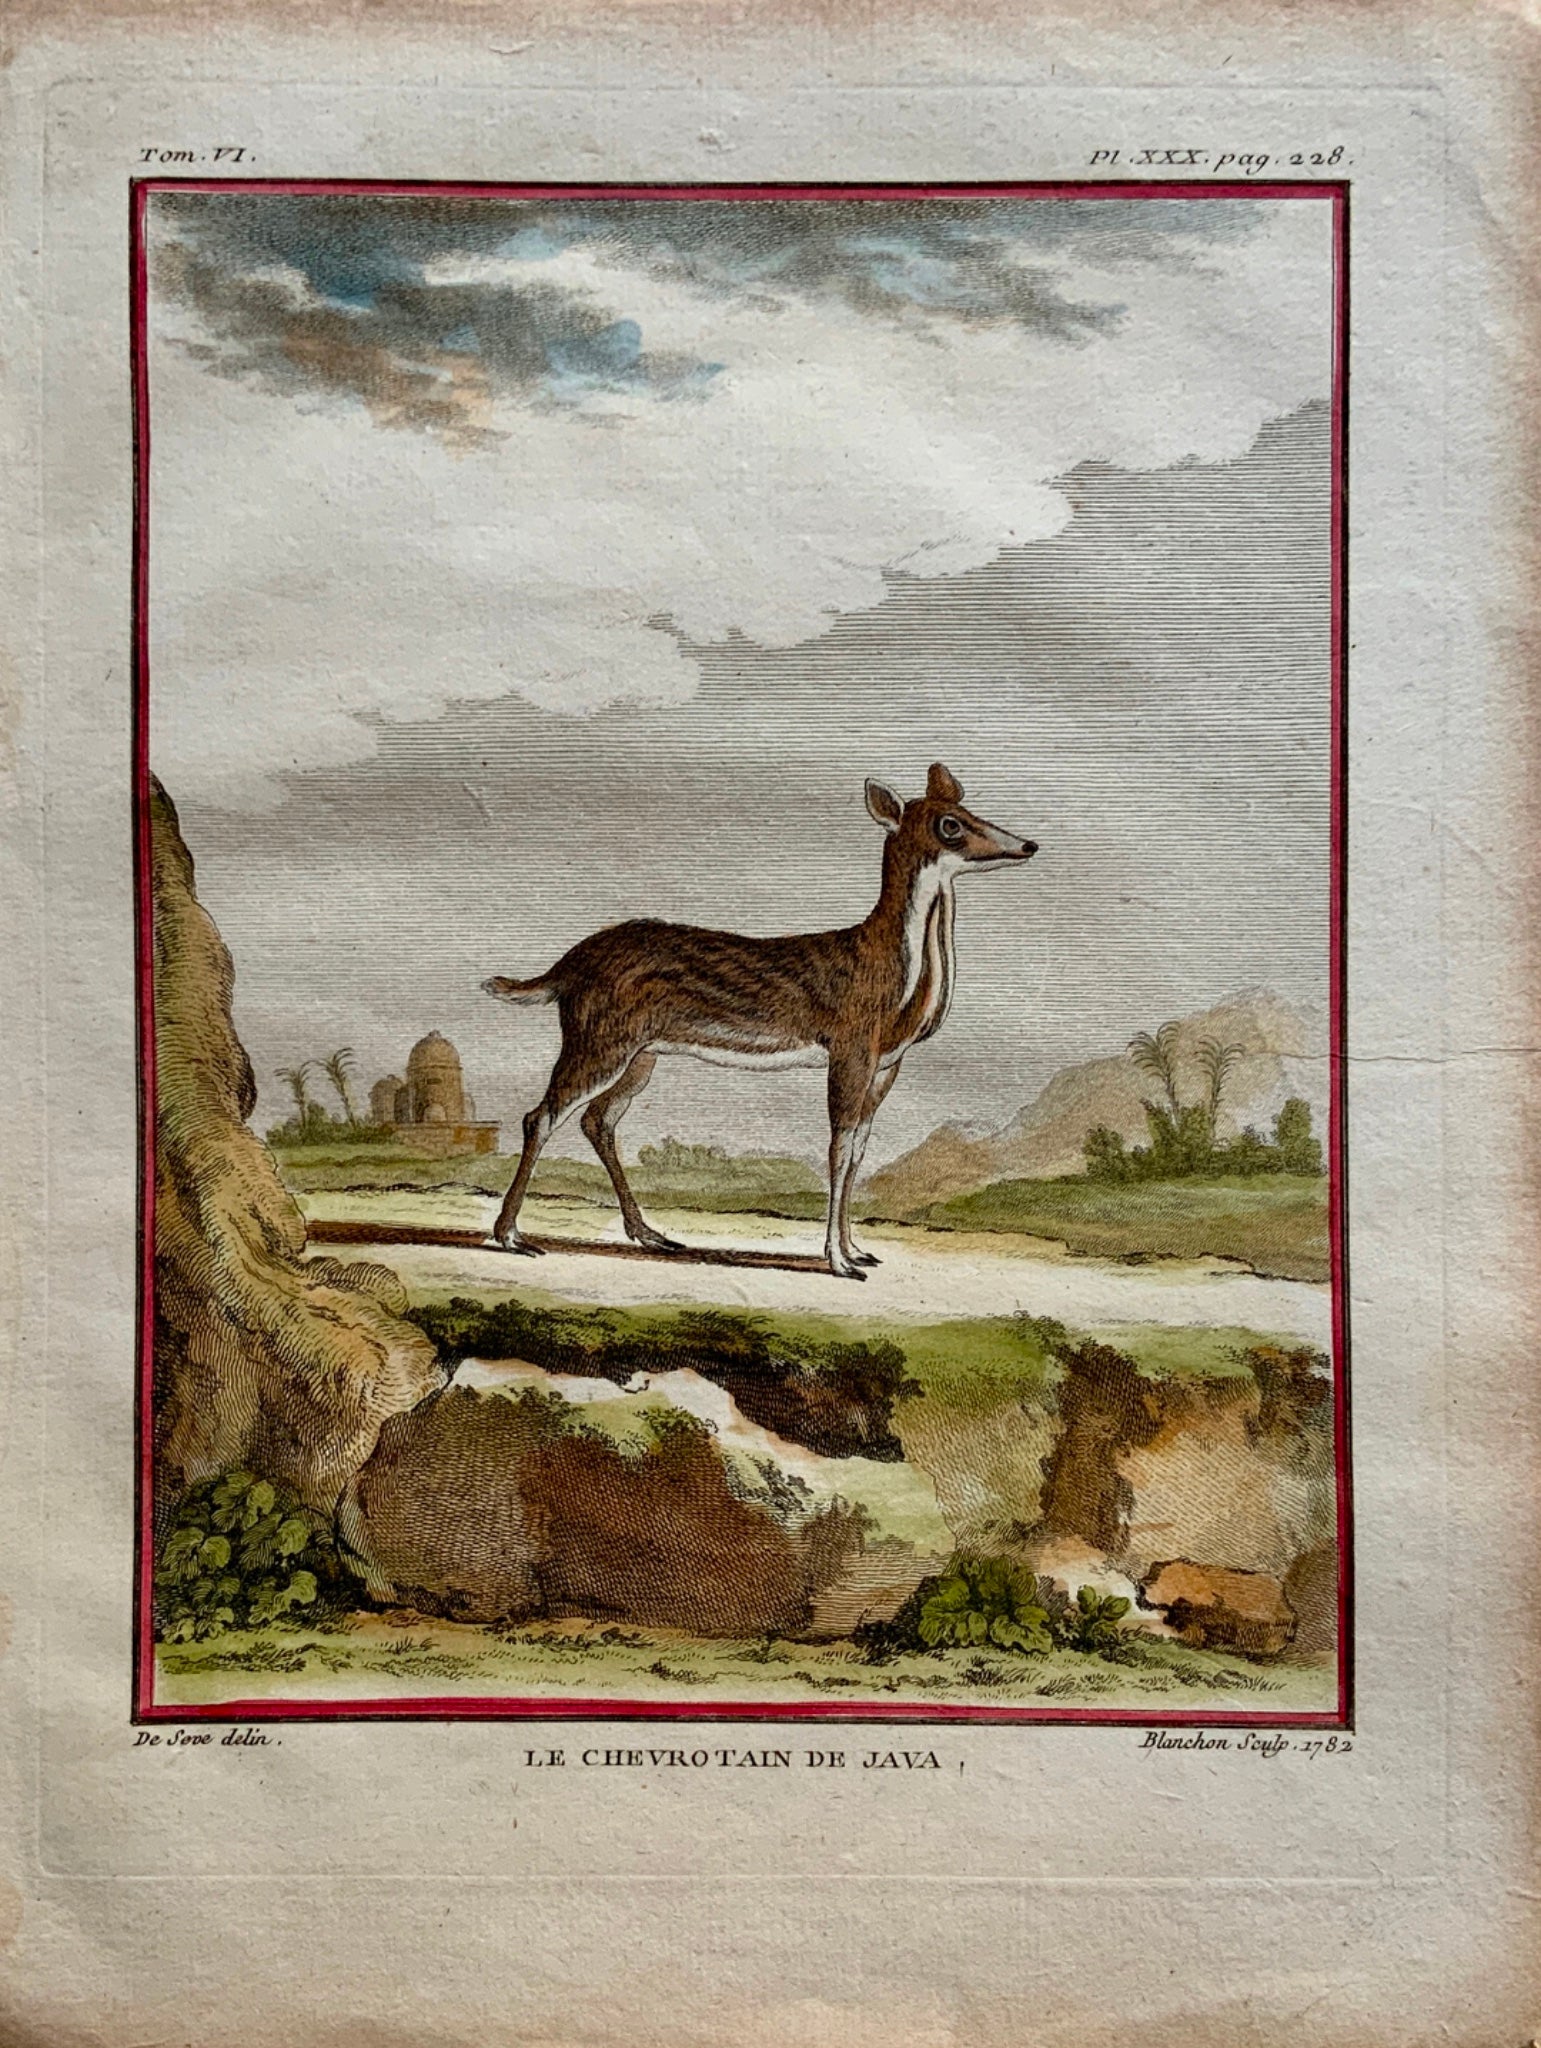 1779 Baron; J. de Seve - Java MOUSE DEER - Mammal - 4to engraving